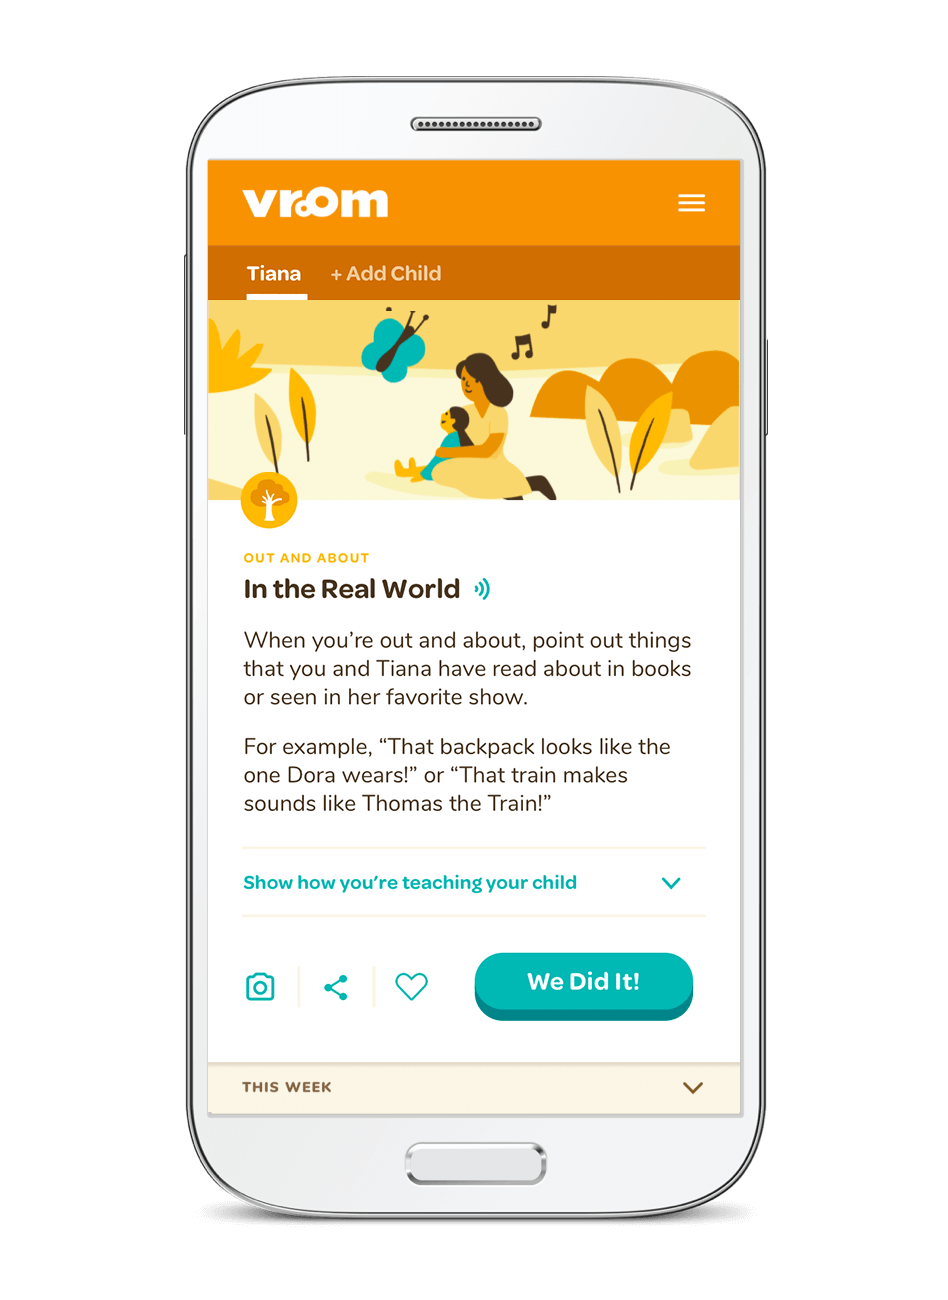 Image of Vroom app on mobile phone